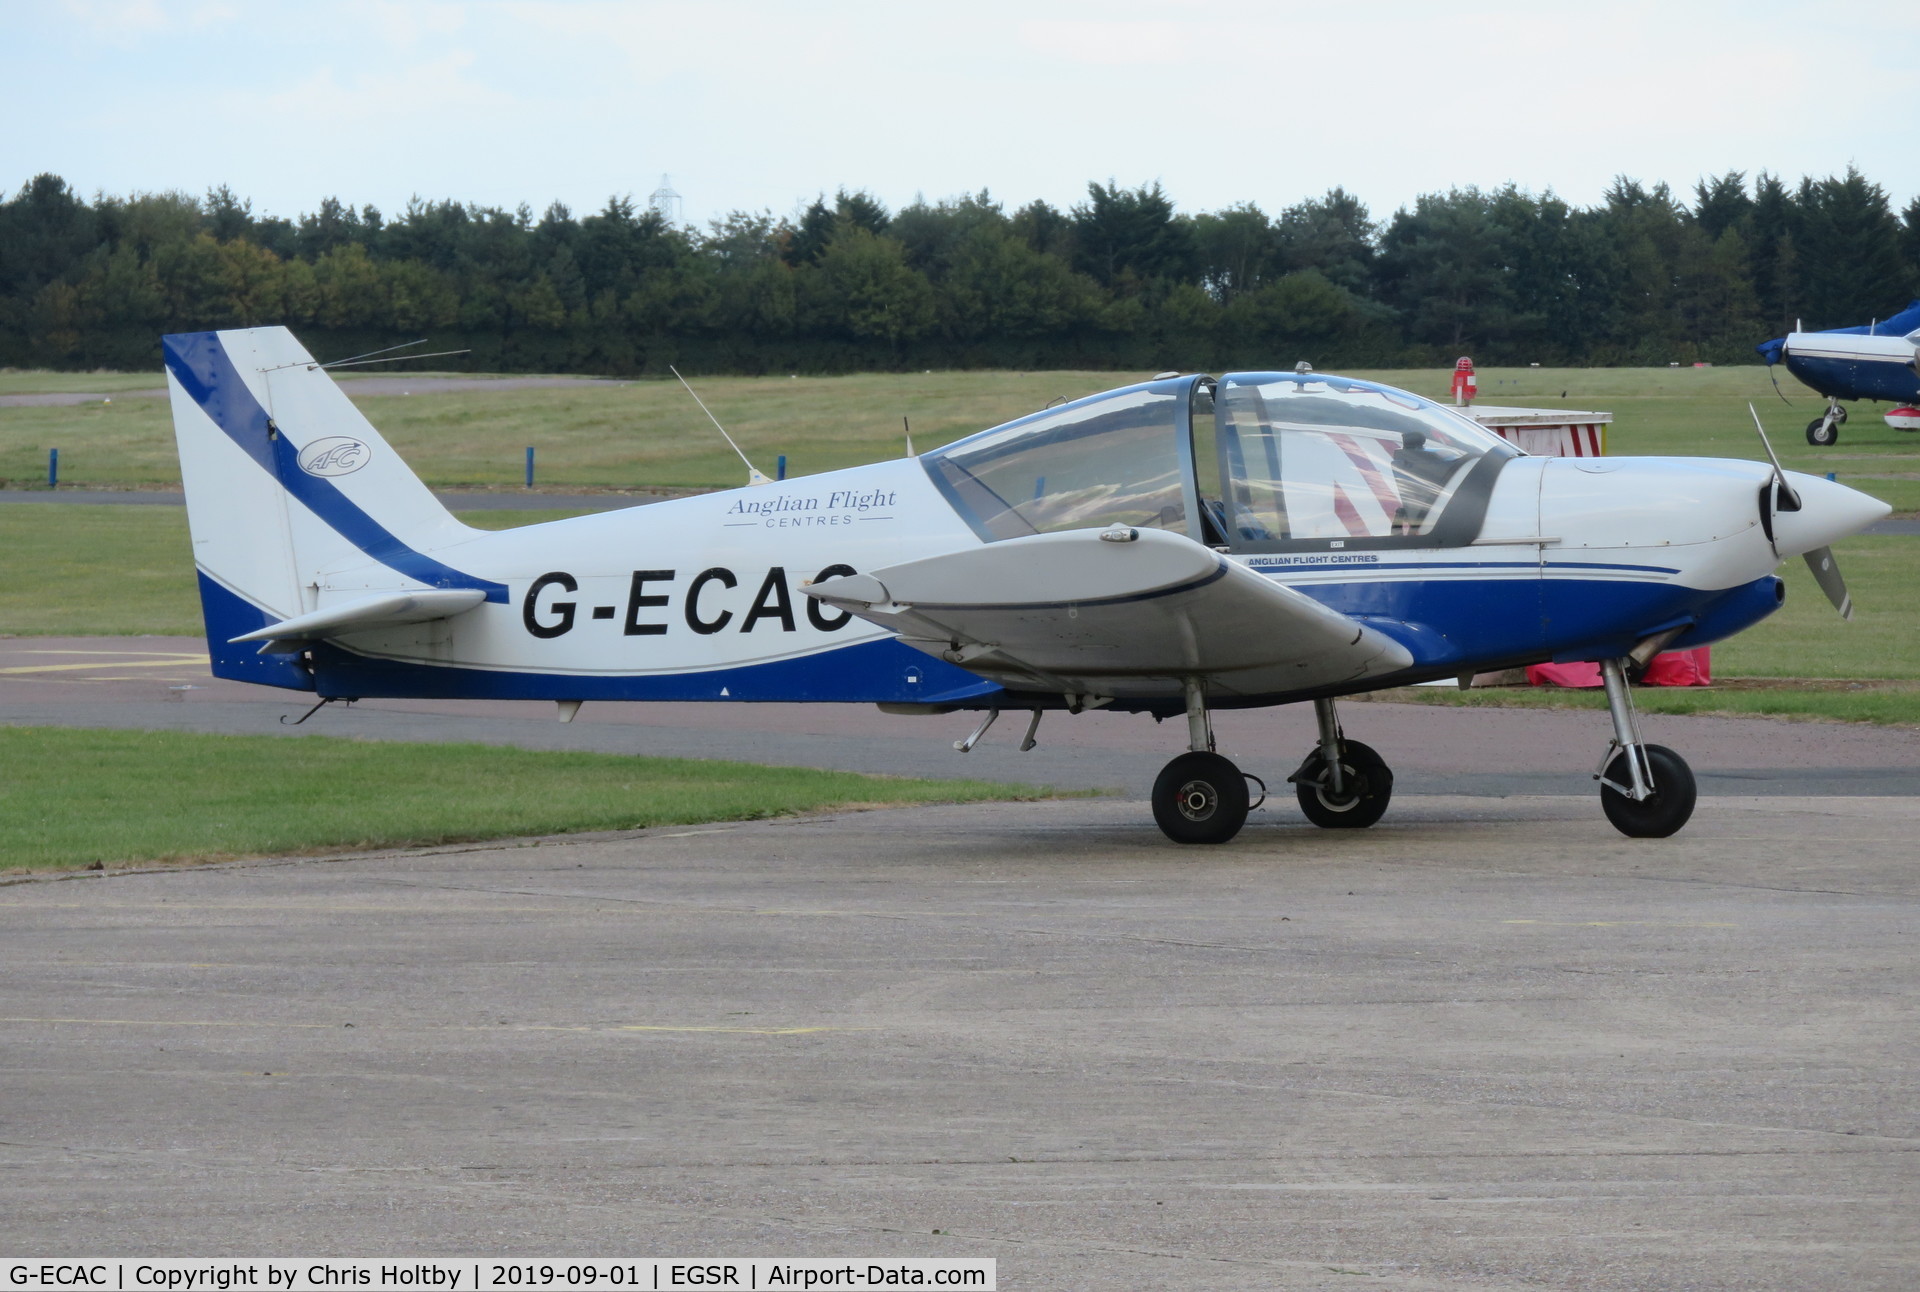 G-ECAC, 2007 Robin R-2120U Alpha C/N 120T-0001, Parked at Earls Colne in Essex